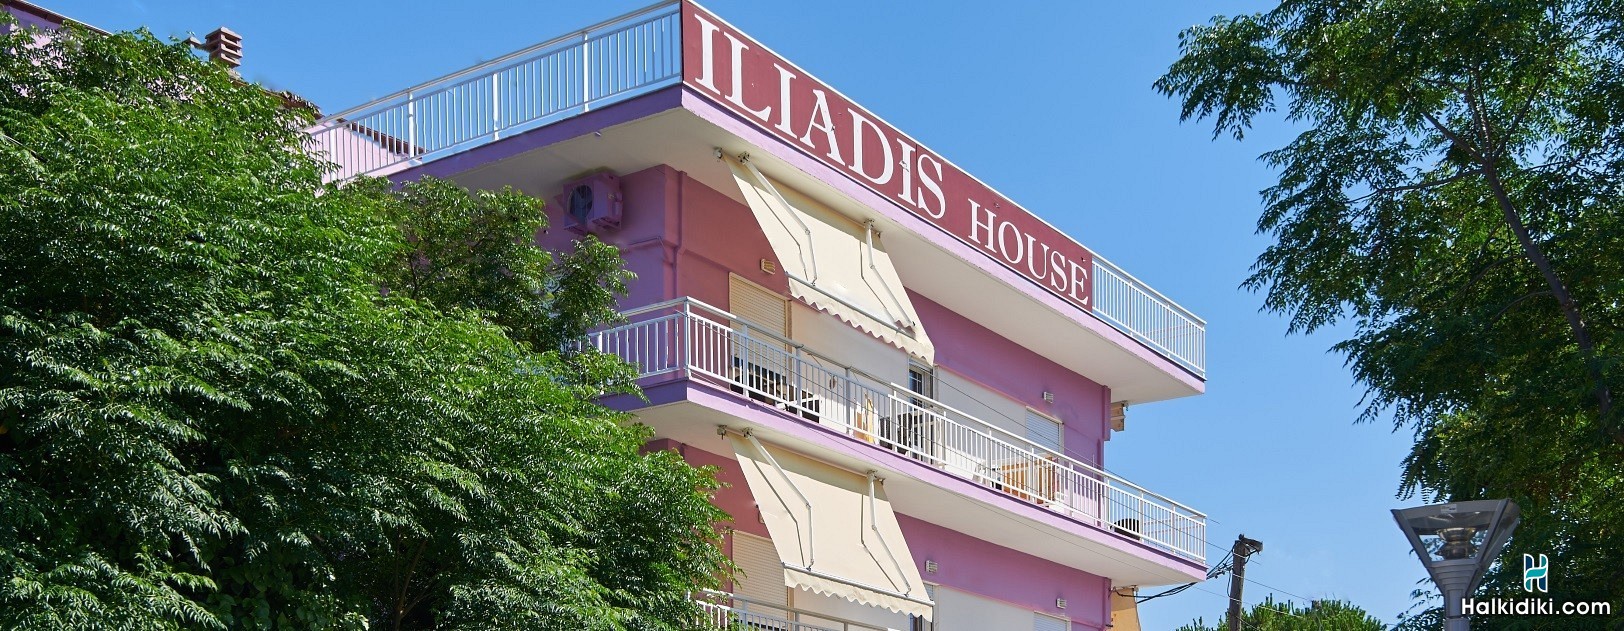 Iliadis House